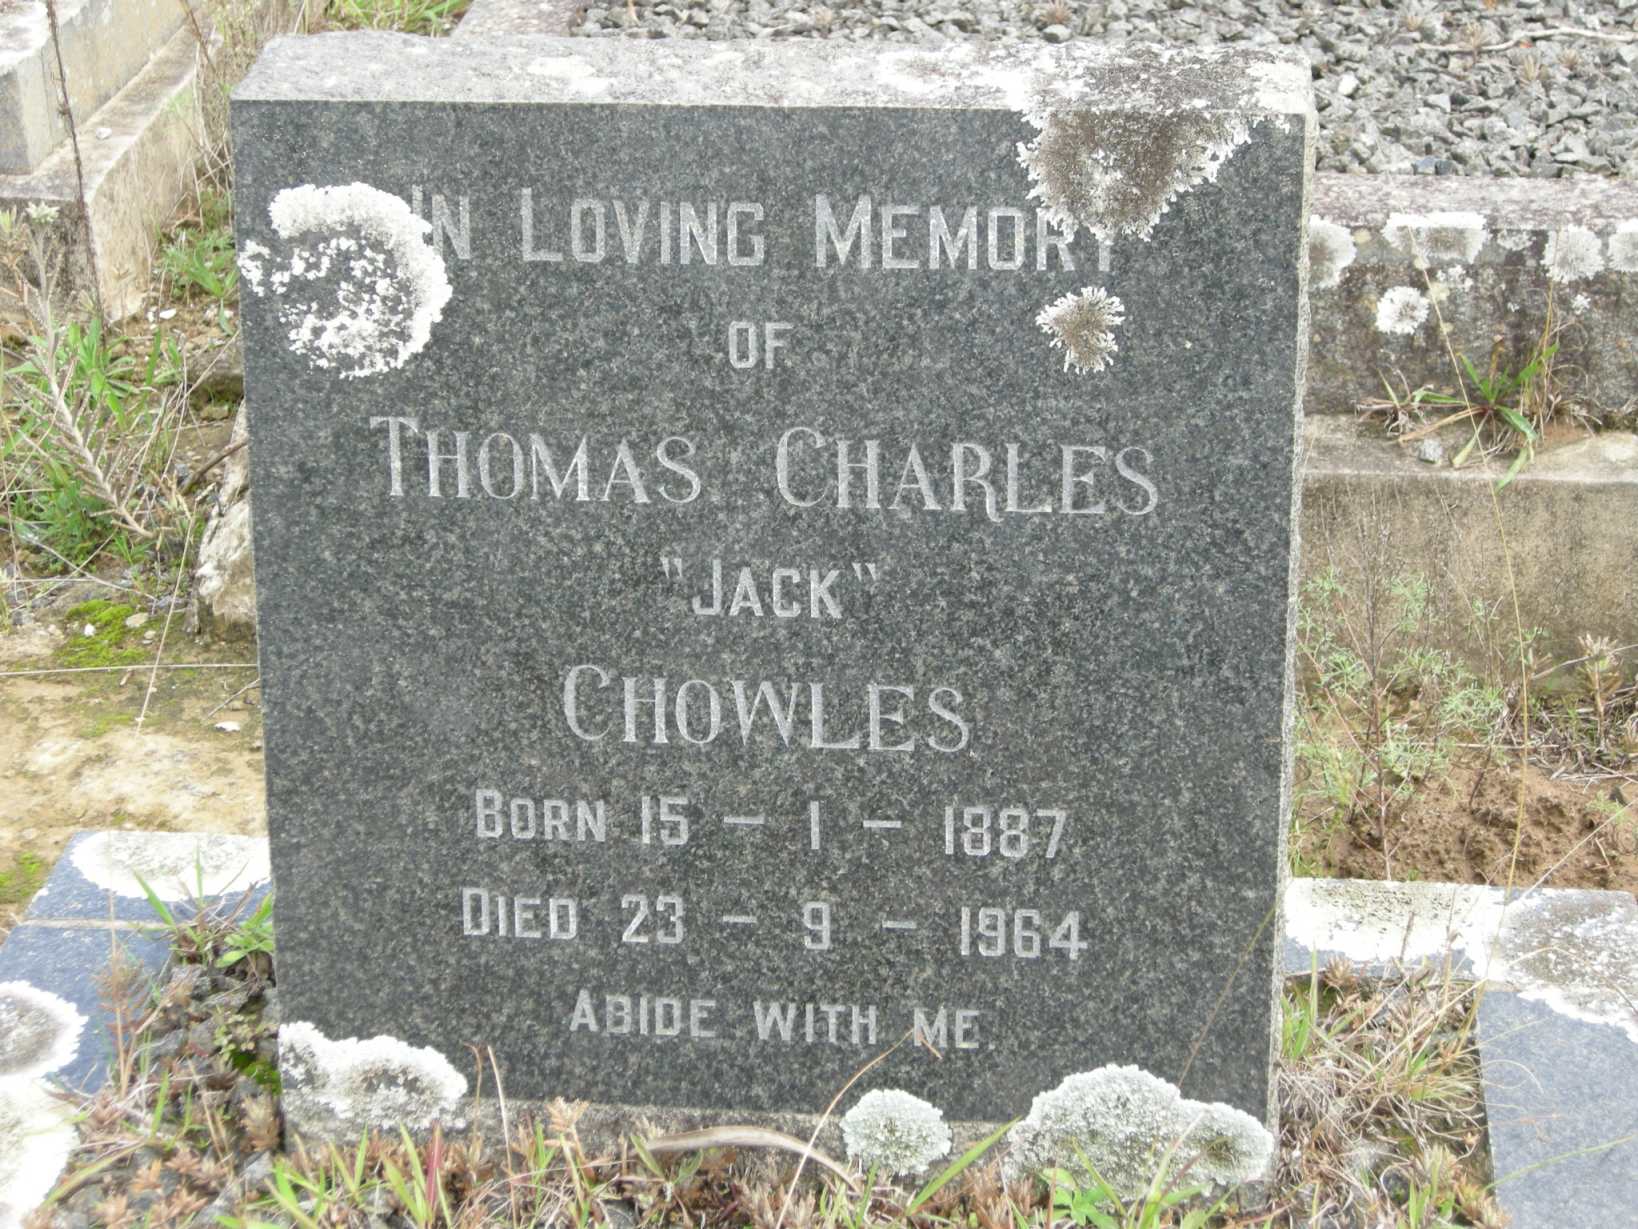 CHOWLES Thomas Charles 1887-1964